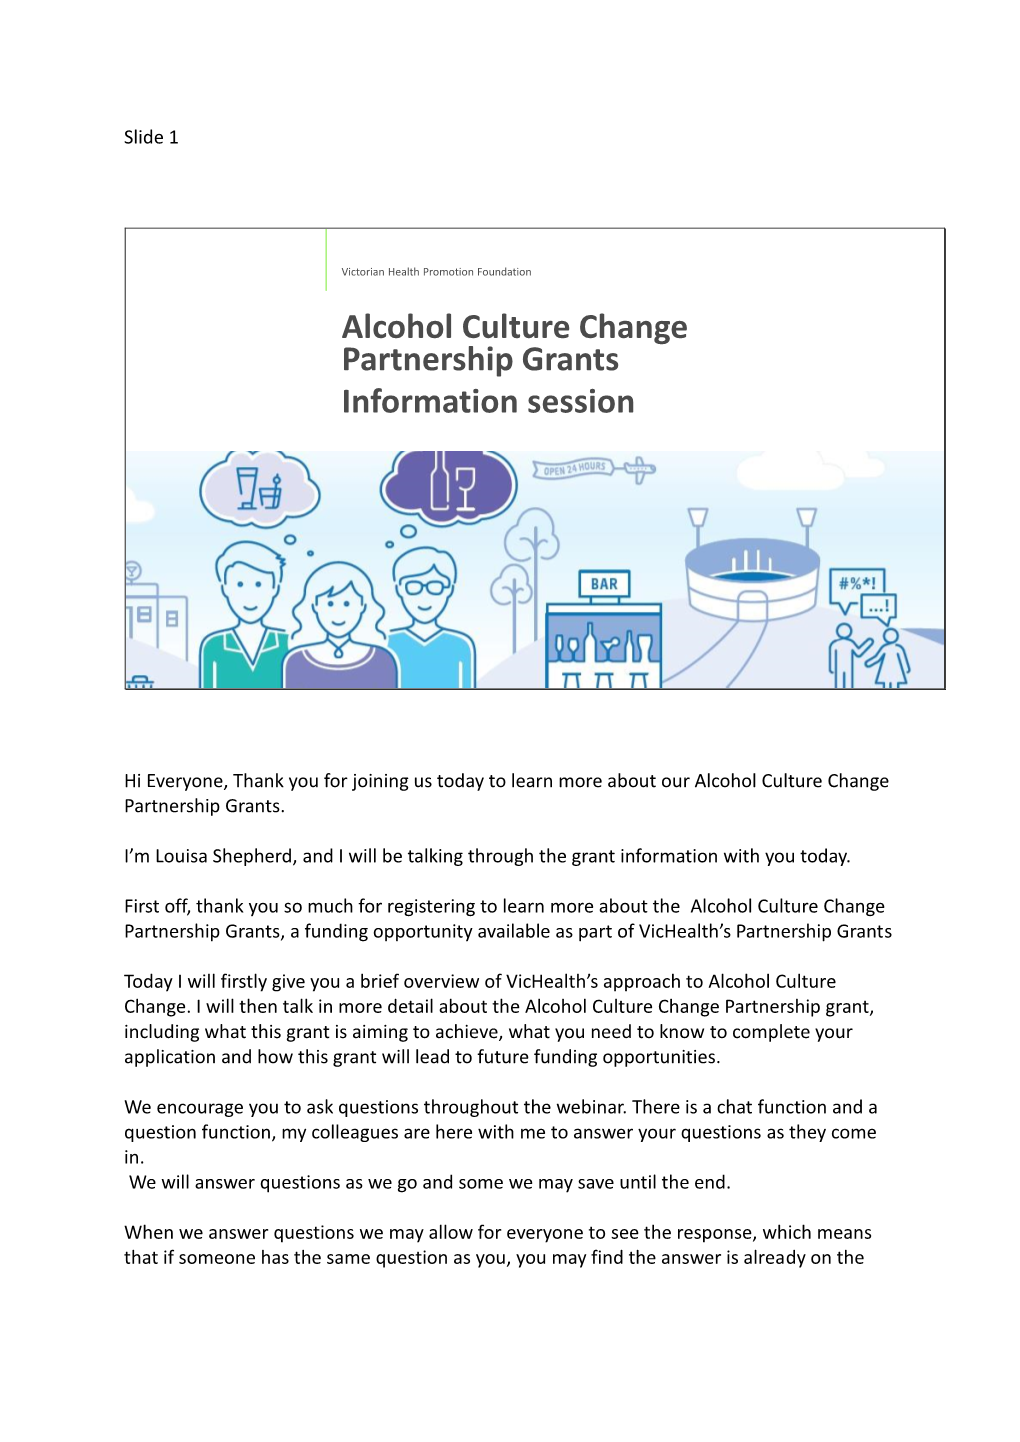 Alcohol Culture Change Partnership Grants Information Session